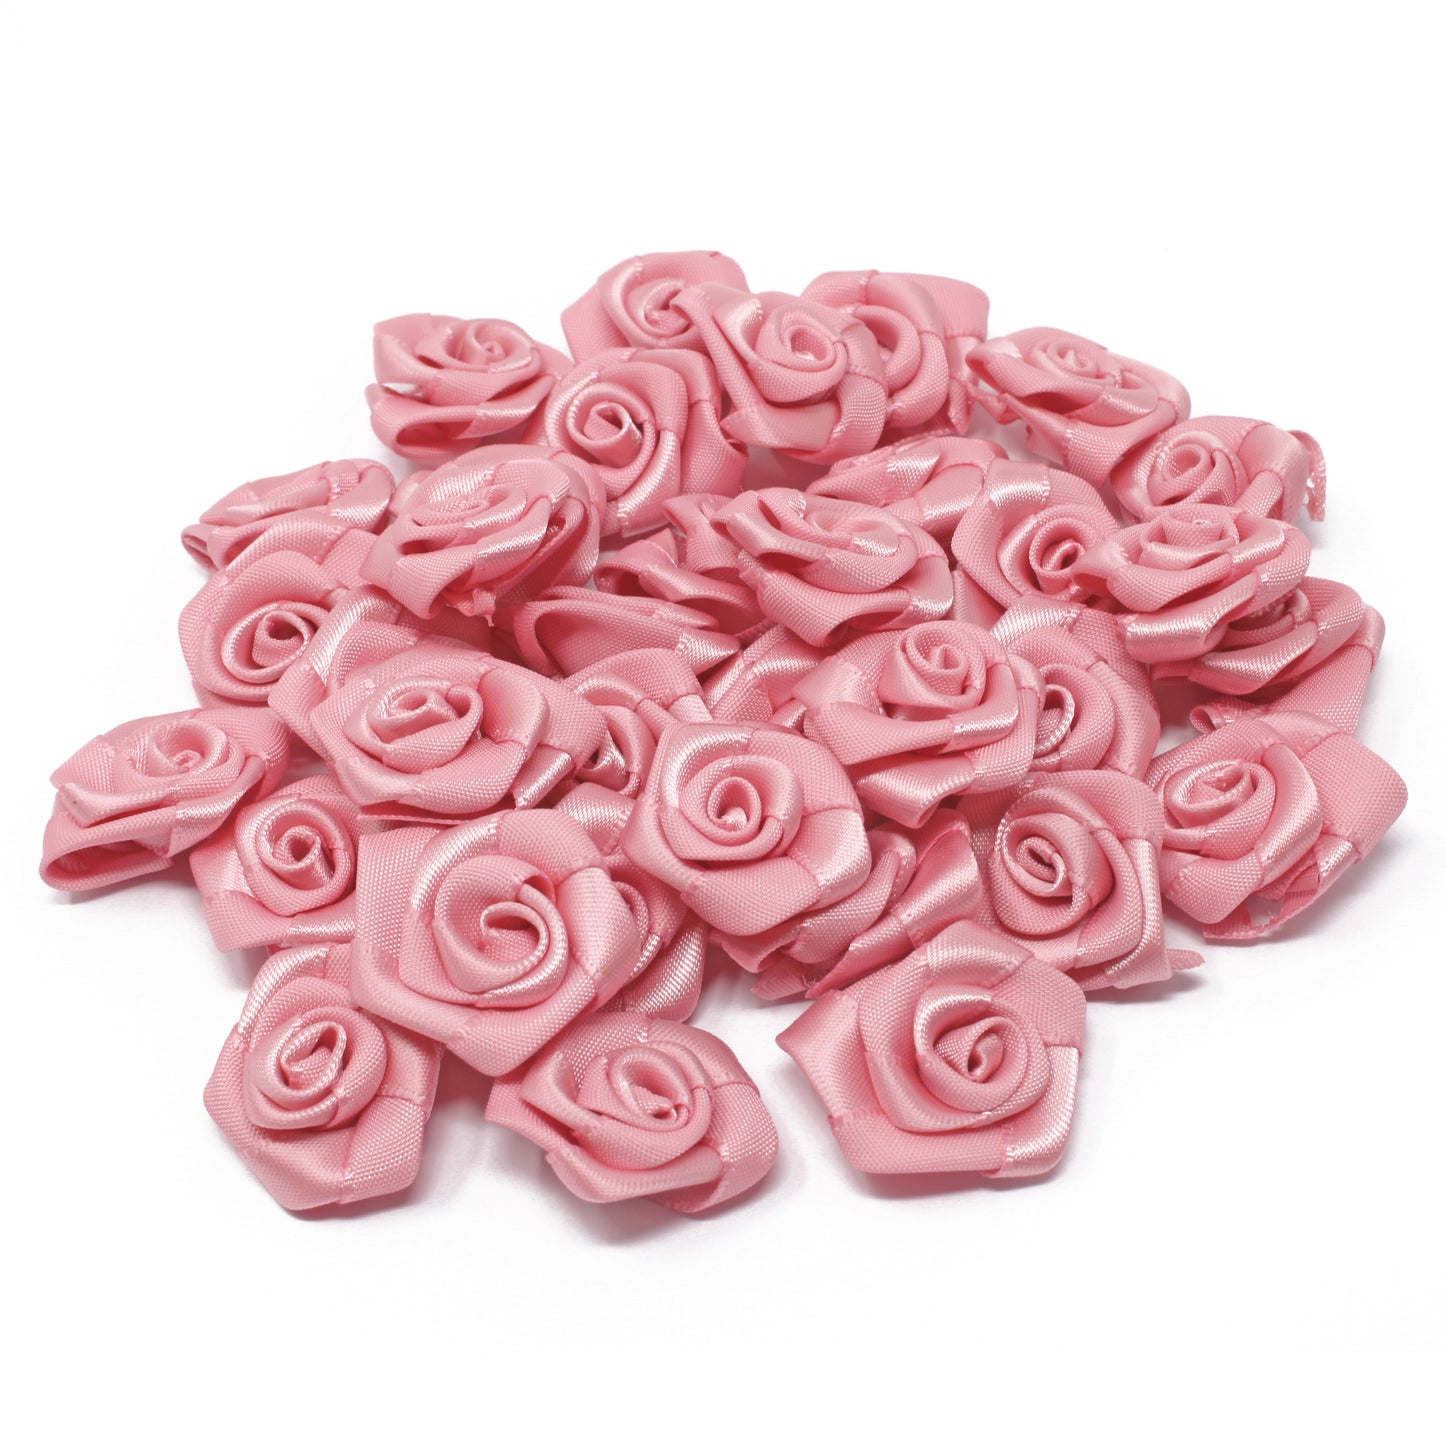 25mm Satin Ribbon Rose Flowers